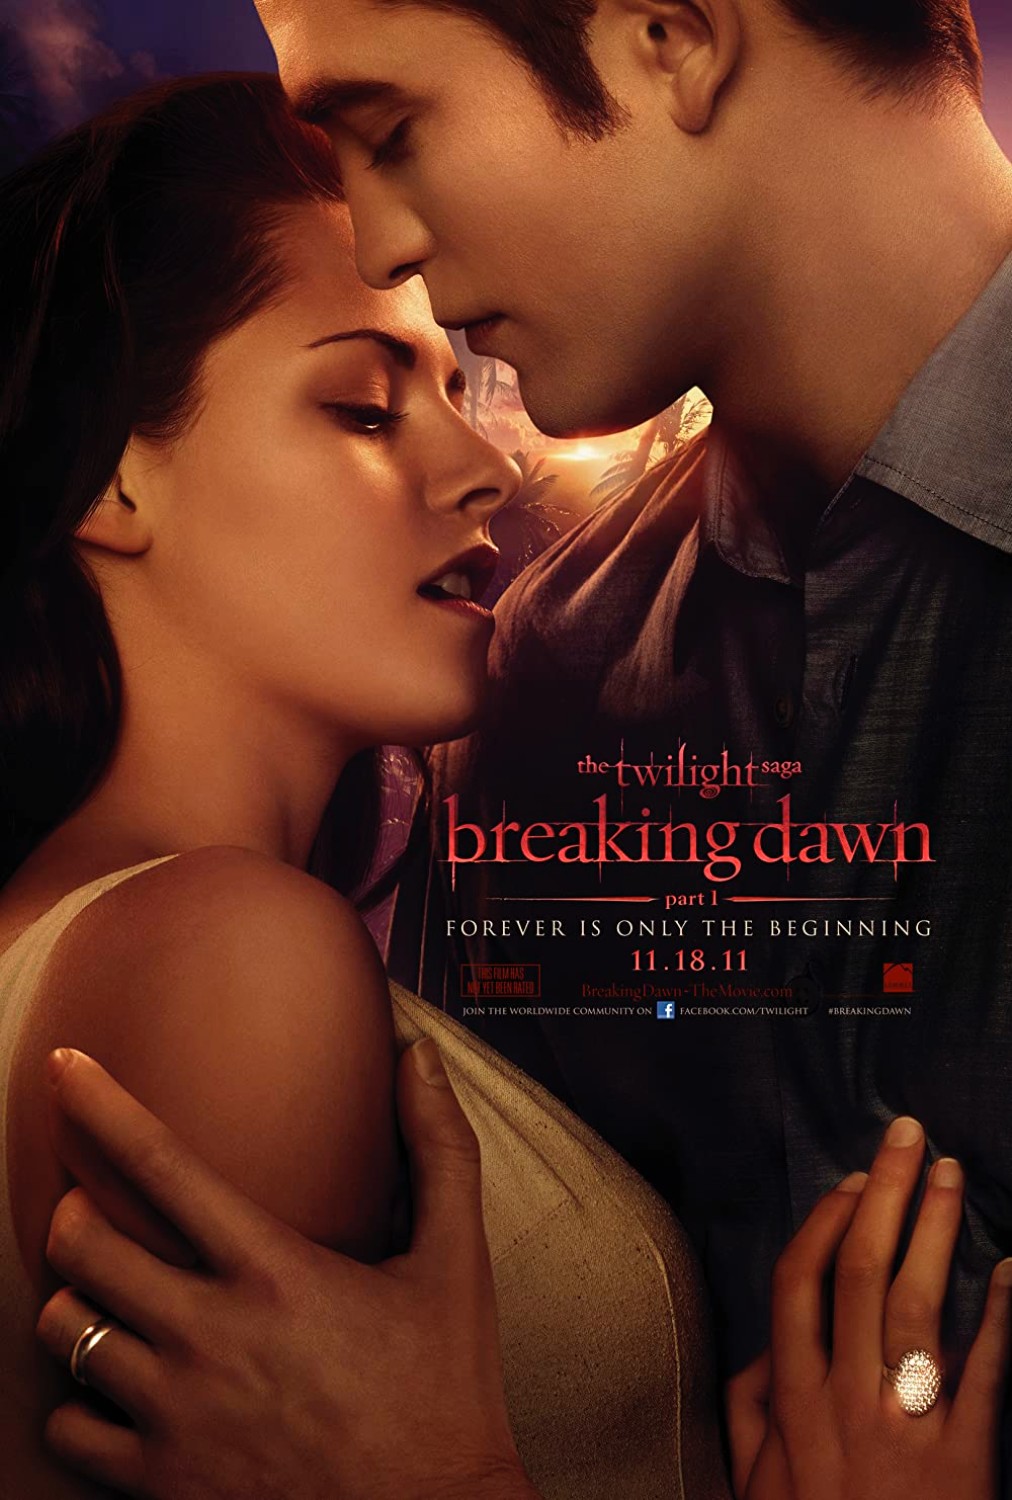 The Twilight 4 Saga Breaking Dawn Part 1 เบรกกิ้งดอน ภาค 1 พากย์ไทย (2011)